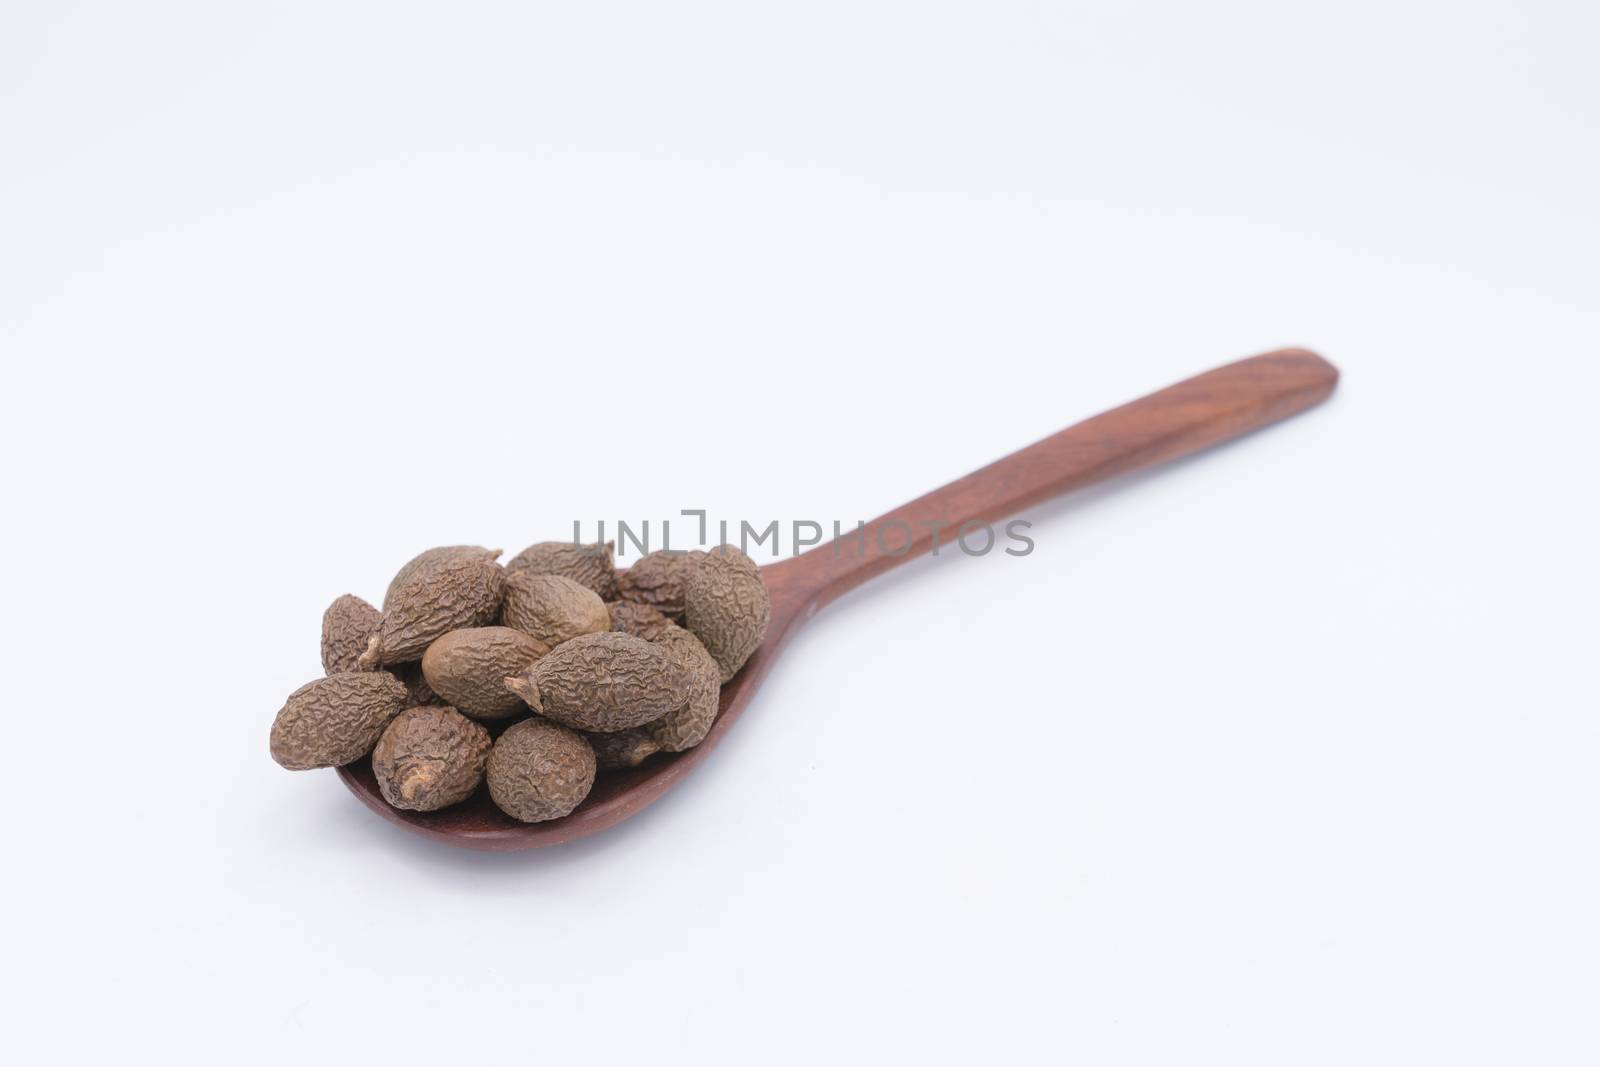 Sterculia lychnophora,Malva nut tree or Taiwan sweet gum tree in wooden spoon on white background